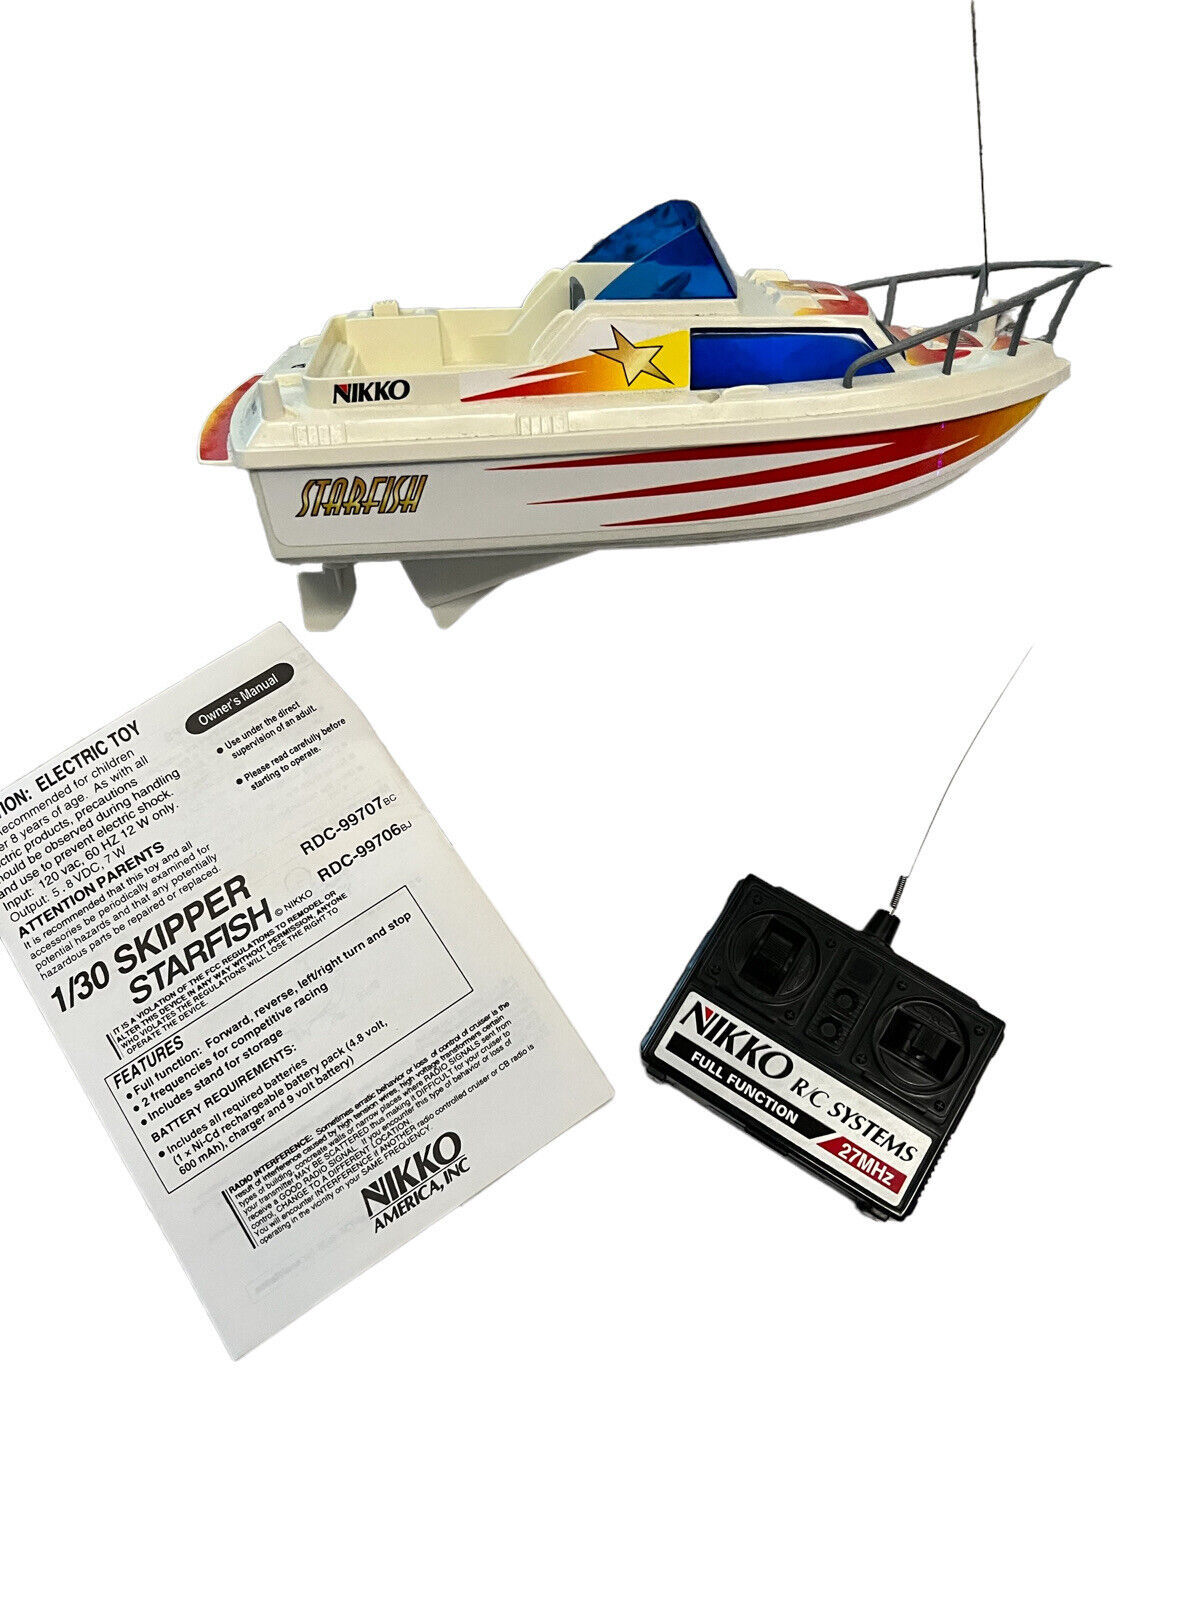 Vintage Nikko Radio Remote Control Boat Skipper Starfish 1/30 Model RDC-99707 - $19.95